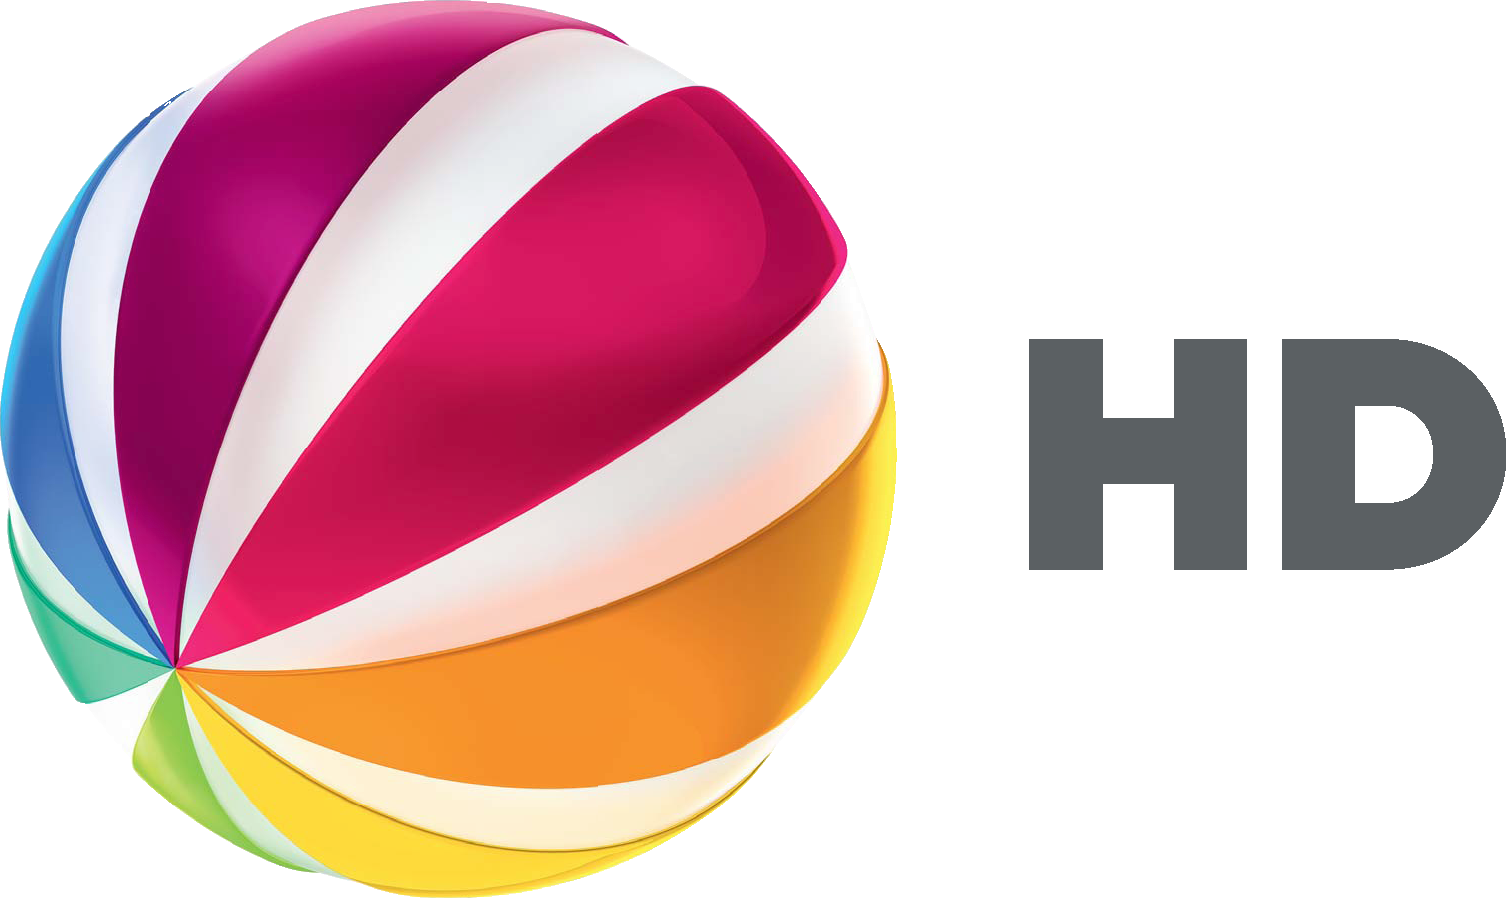 Puretv Hd Und Advancetv Hd - Sat 1 Hd Logo (1506x898)